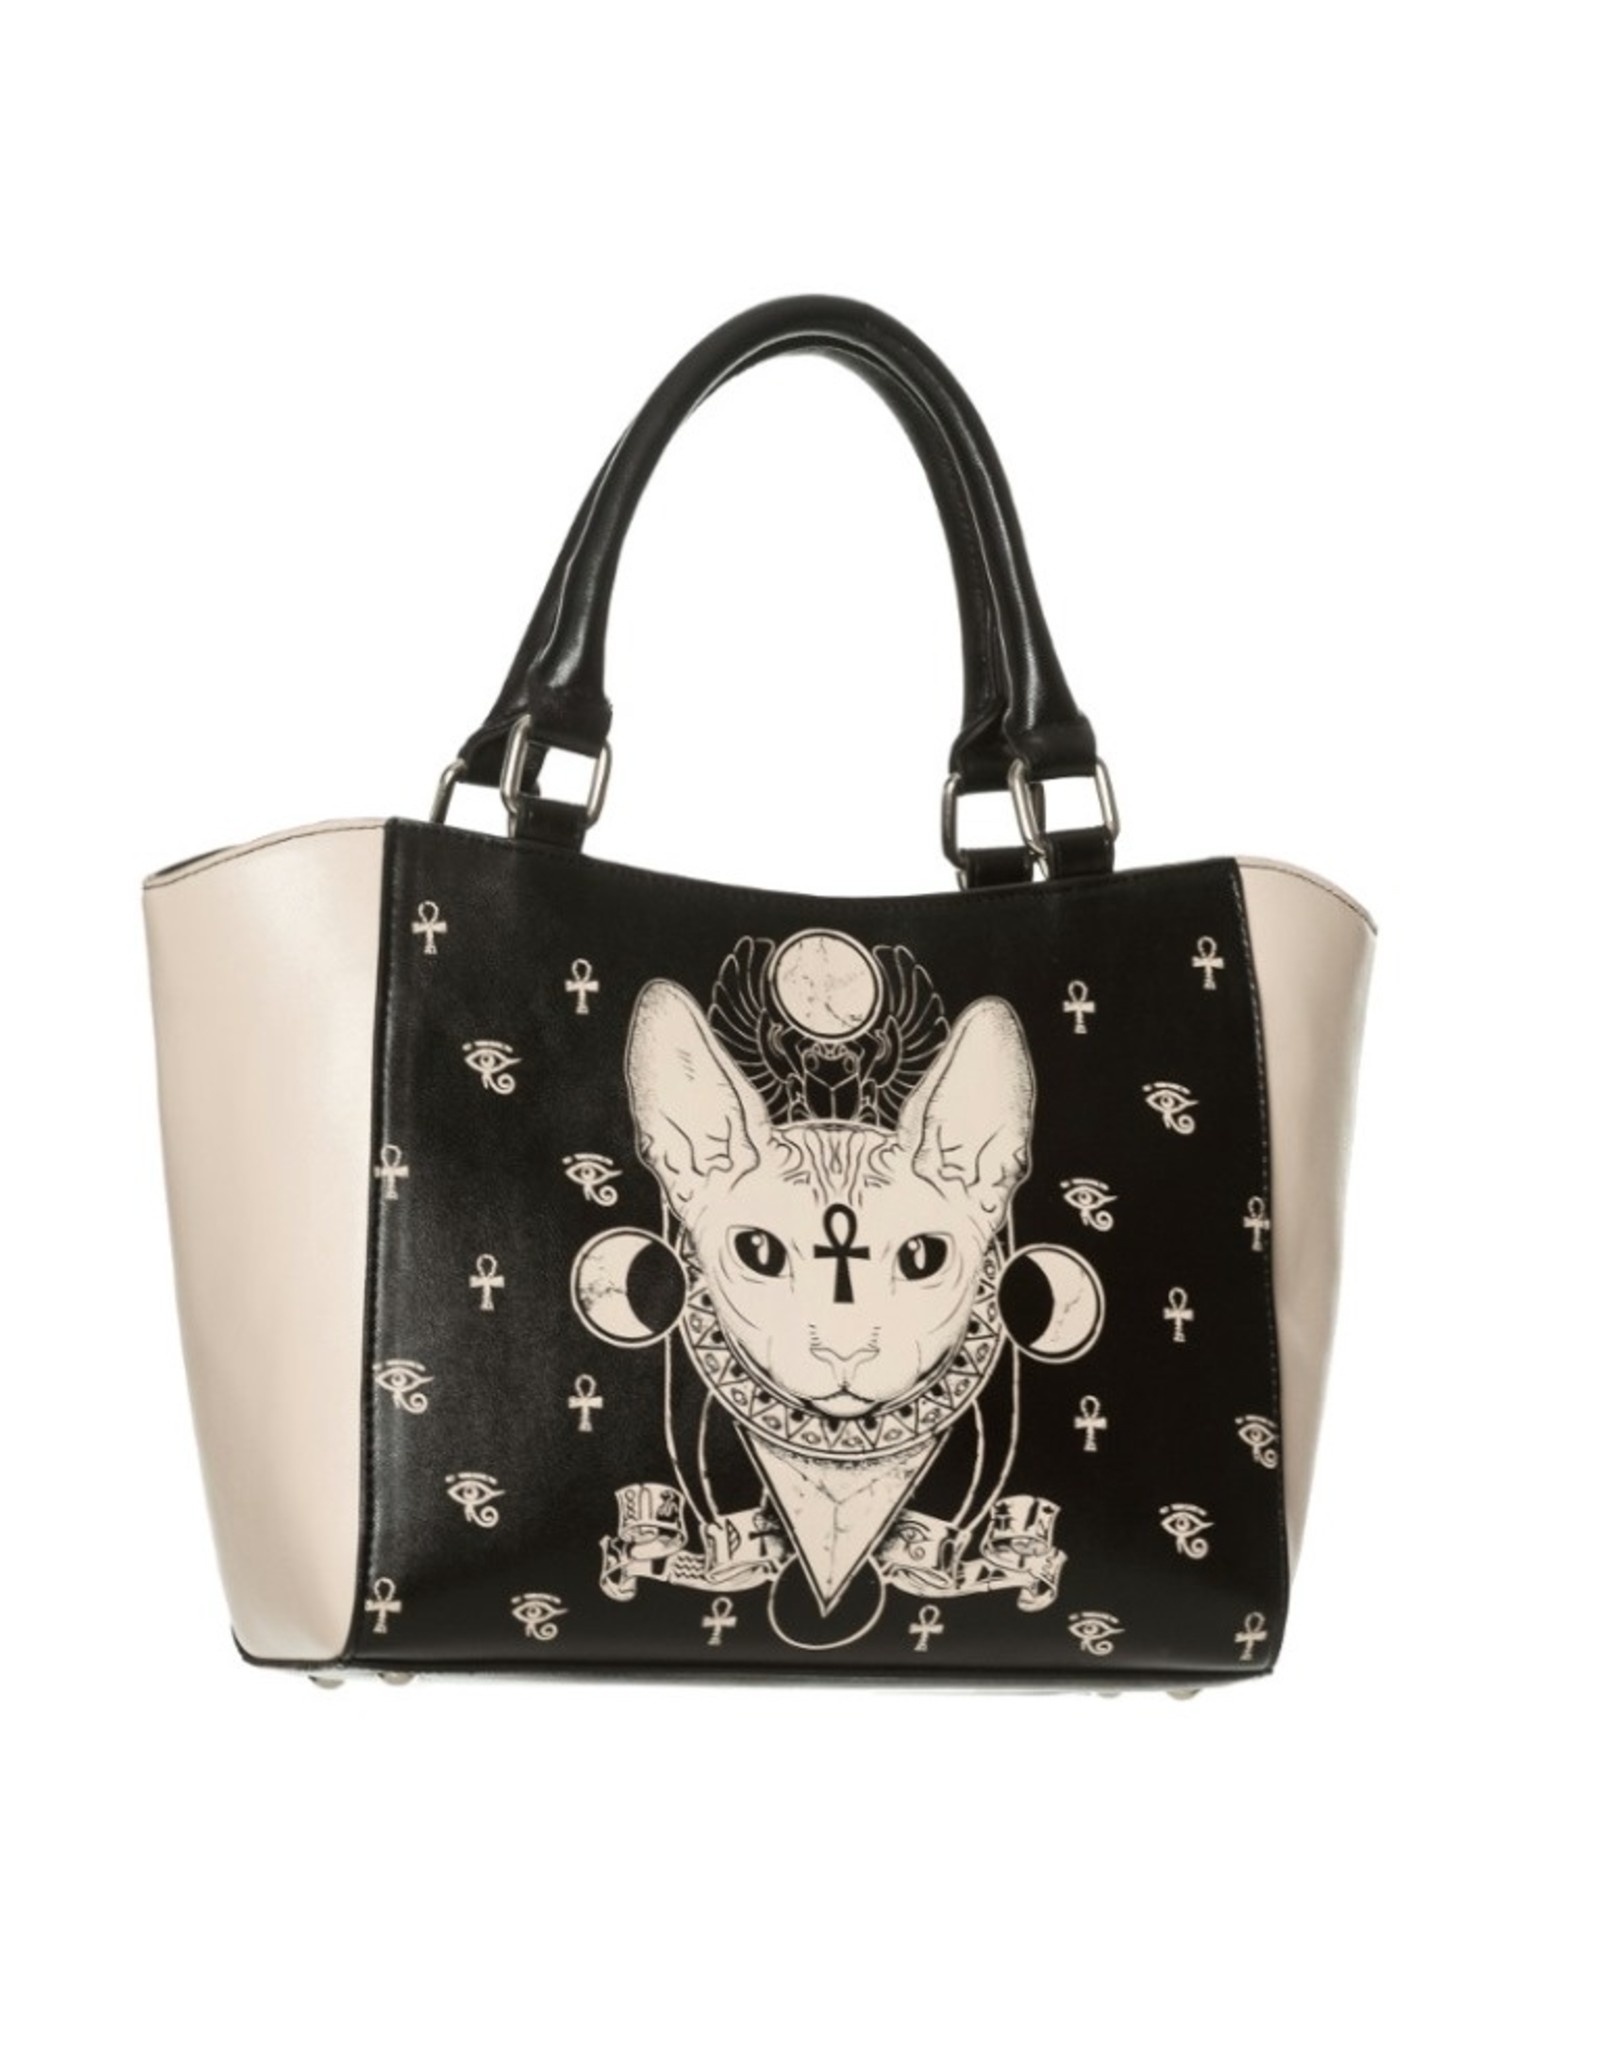 Banned Gothic bags Steampunk bags - Banned Bastet Egyptian Cat Goddess Handbag